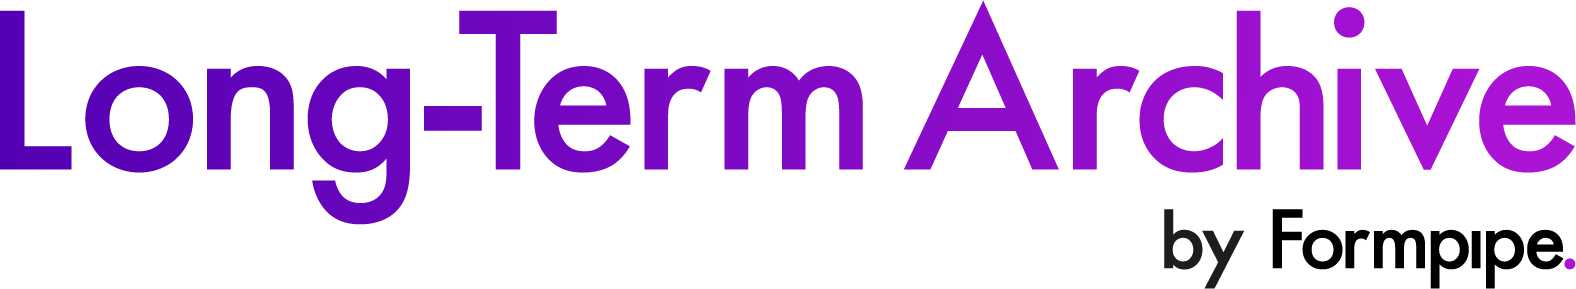 Long-Term Archive logo